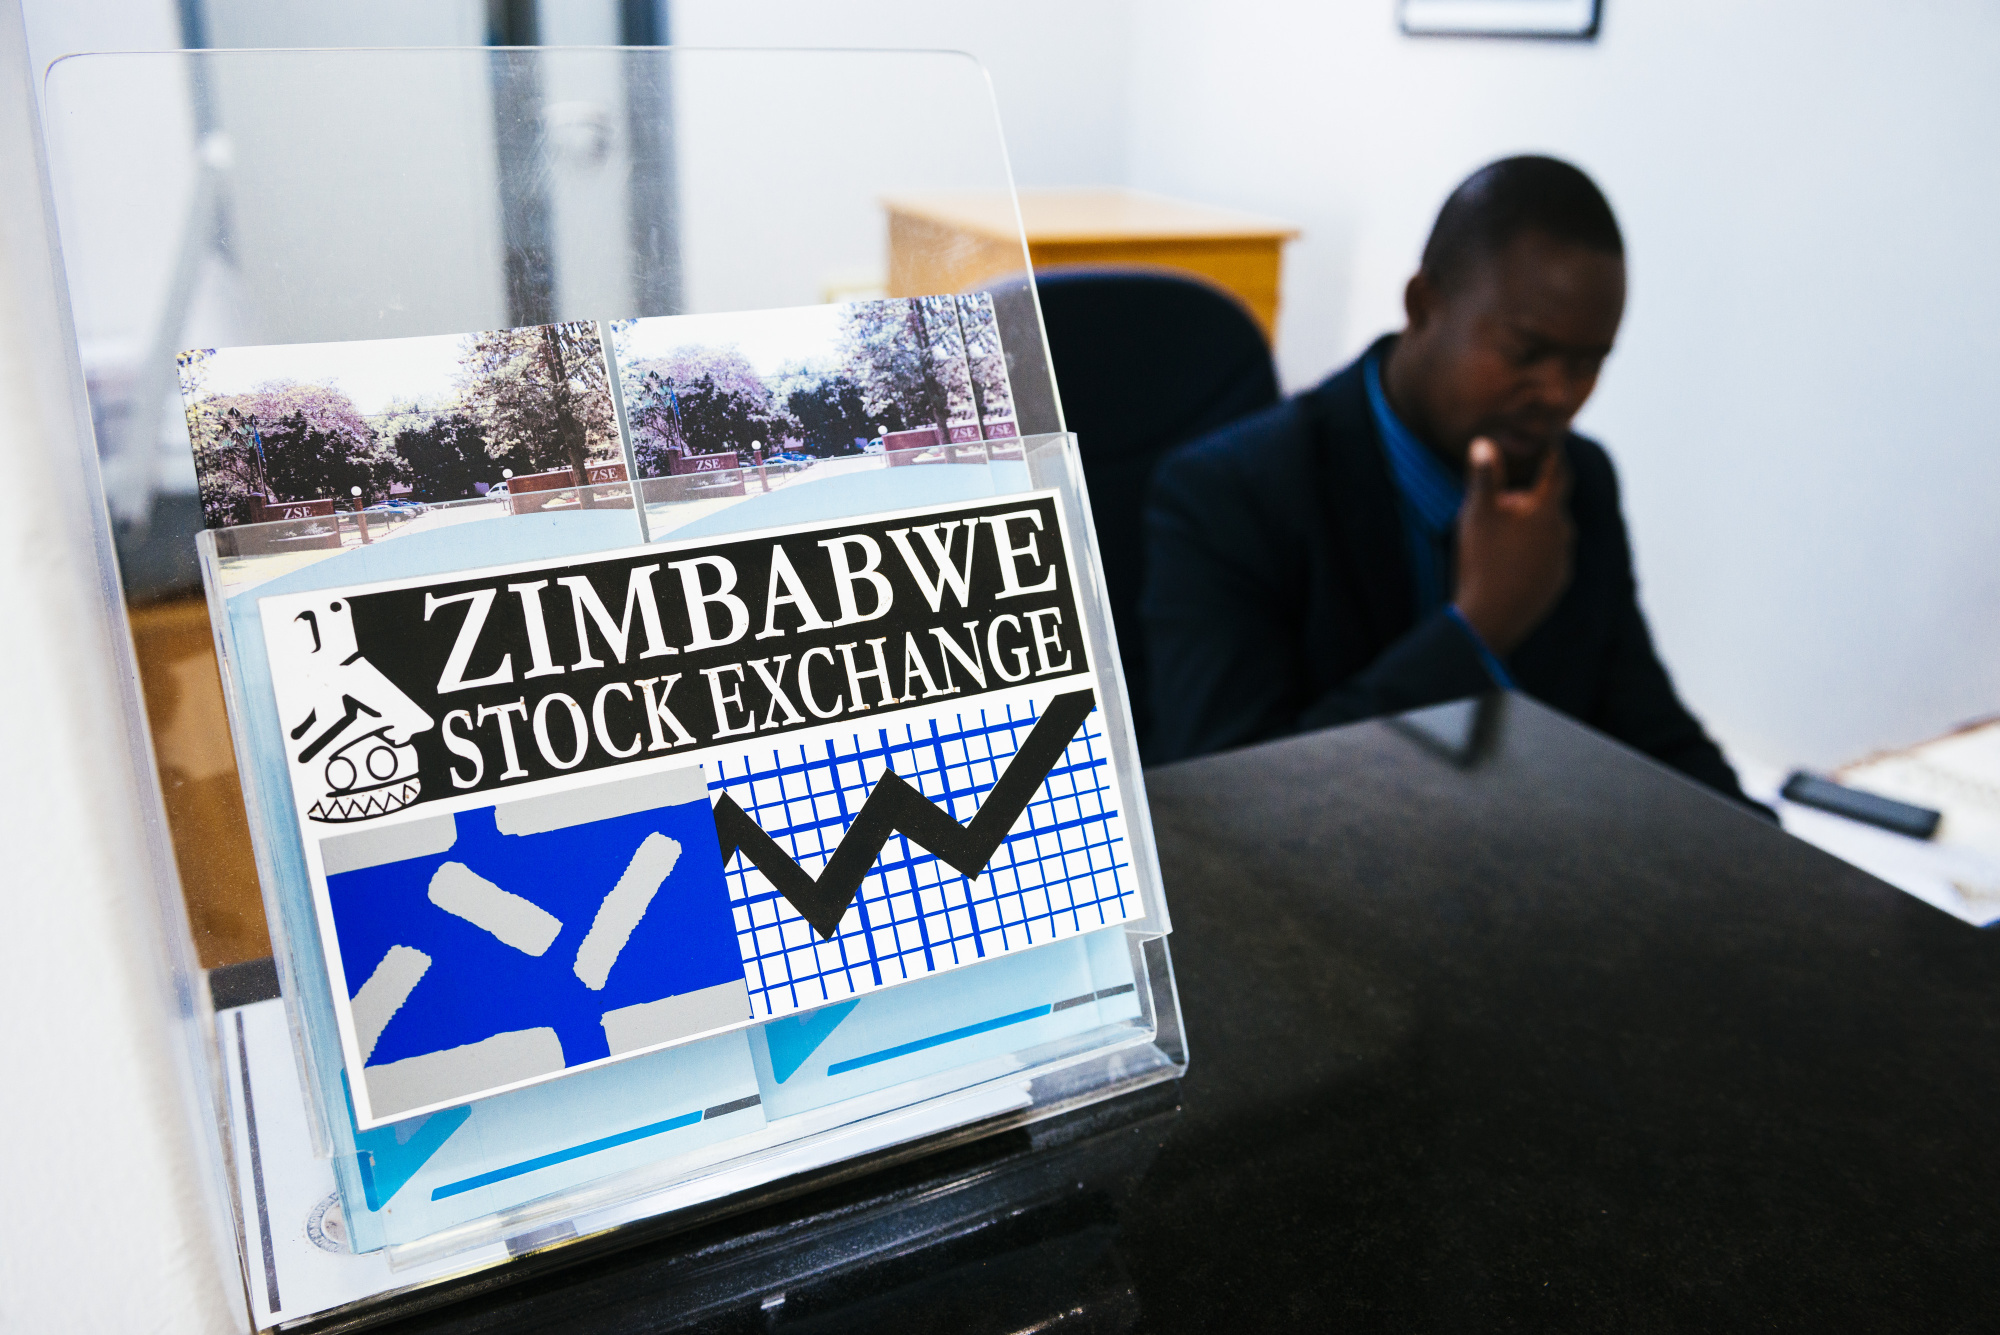 Zimbabwe Stock Exchange in Harare.